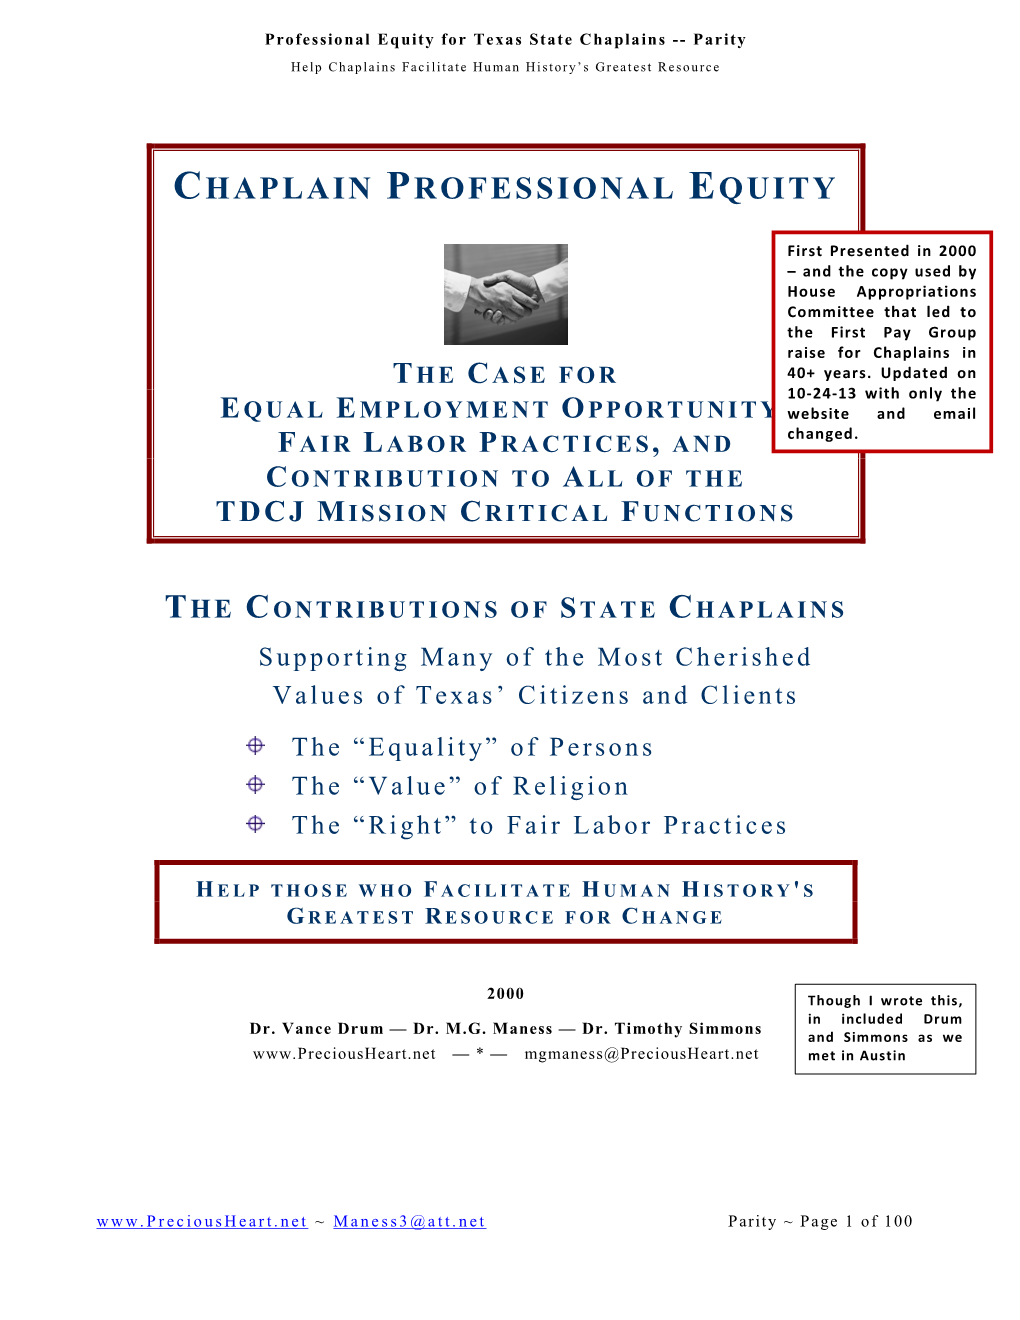 Chaplain Professional Equity